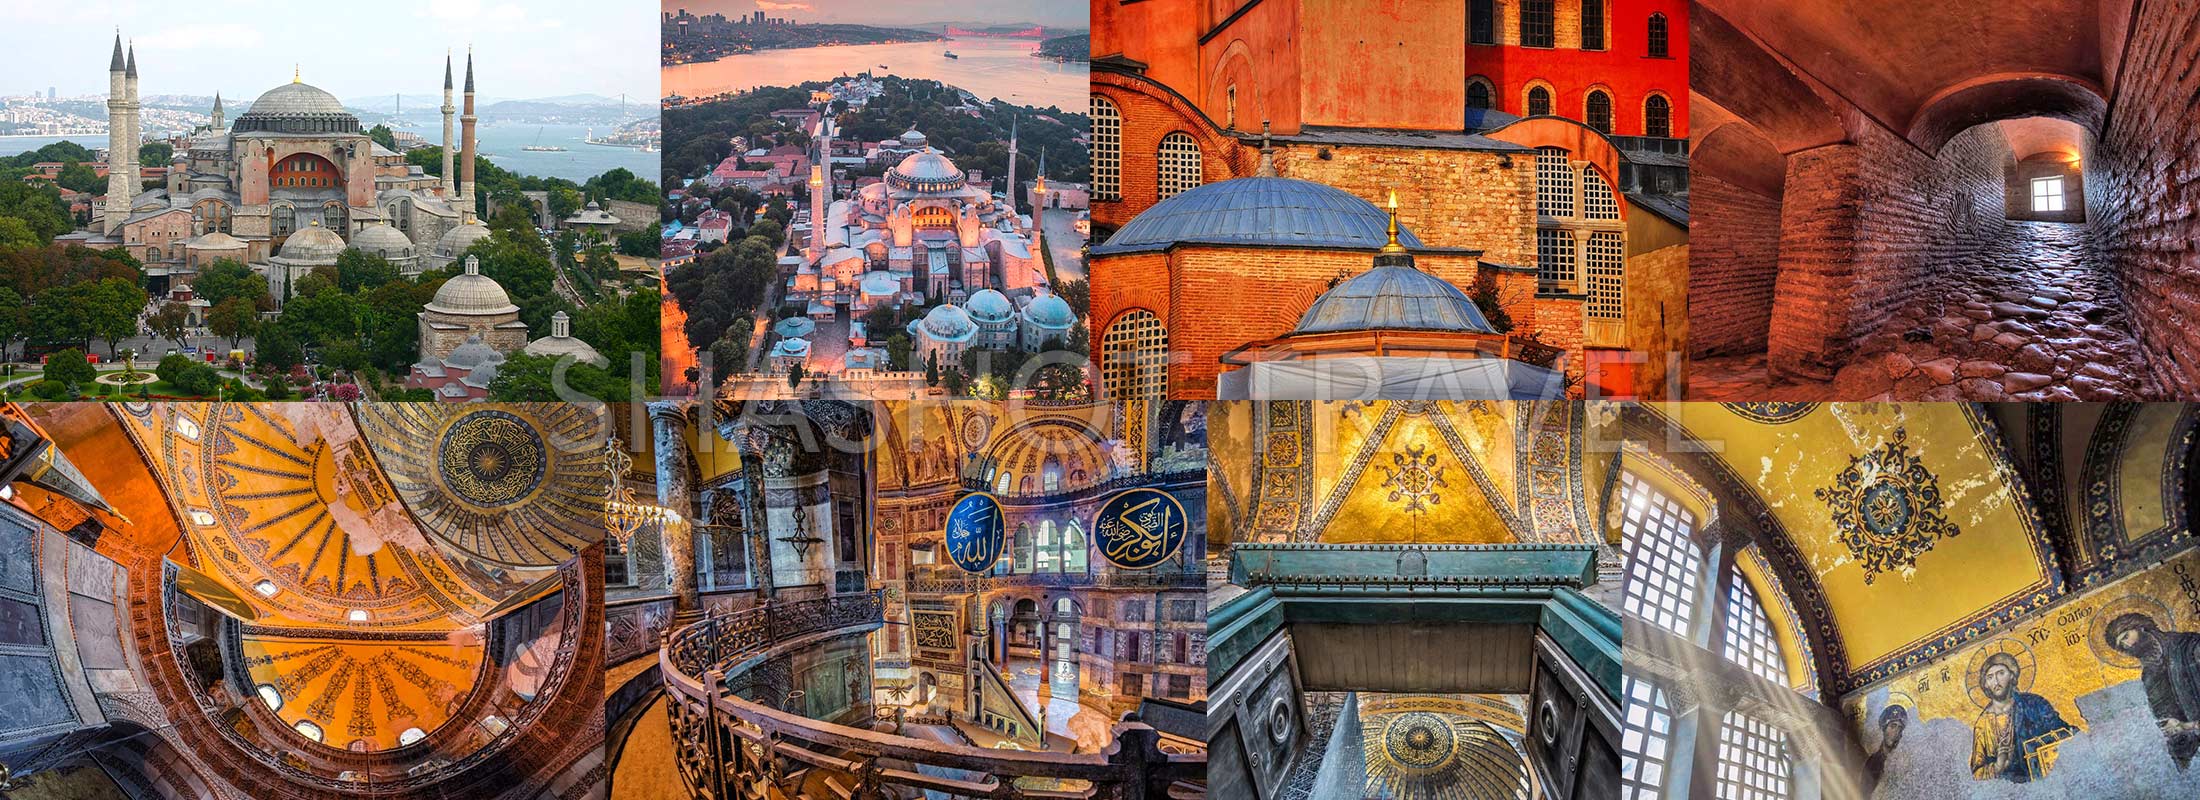 hagia-sophia-museum-istanbul-turkey-shashot-travel-turkiye